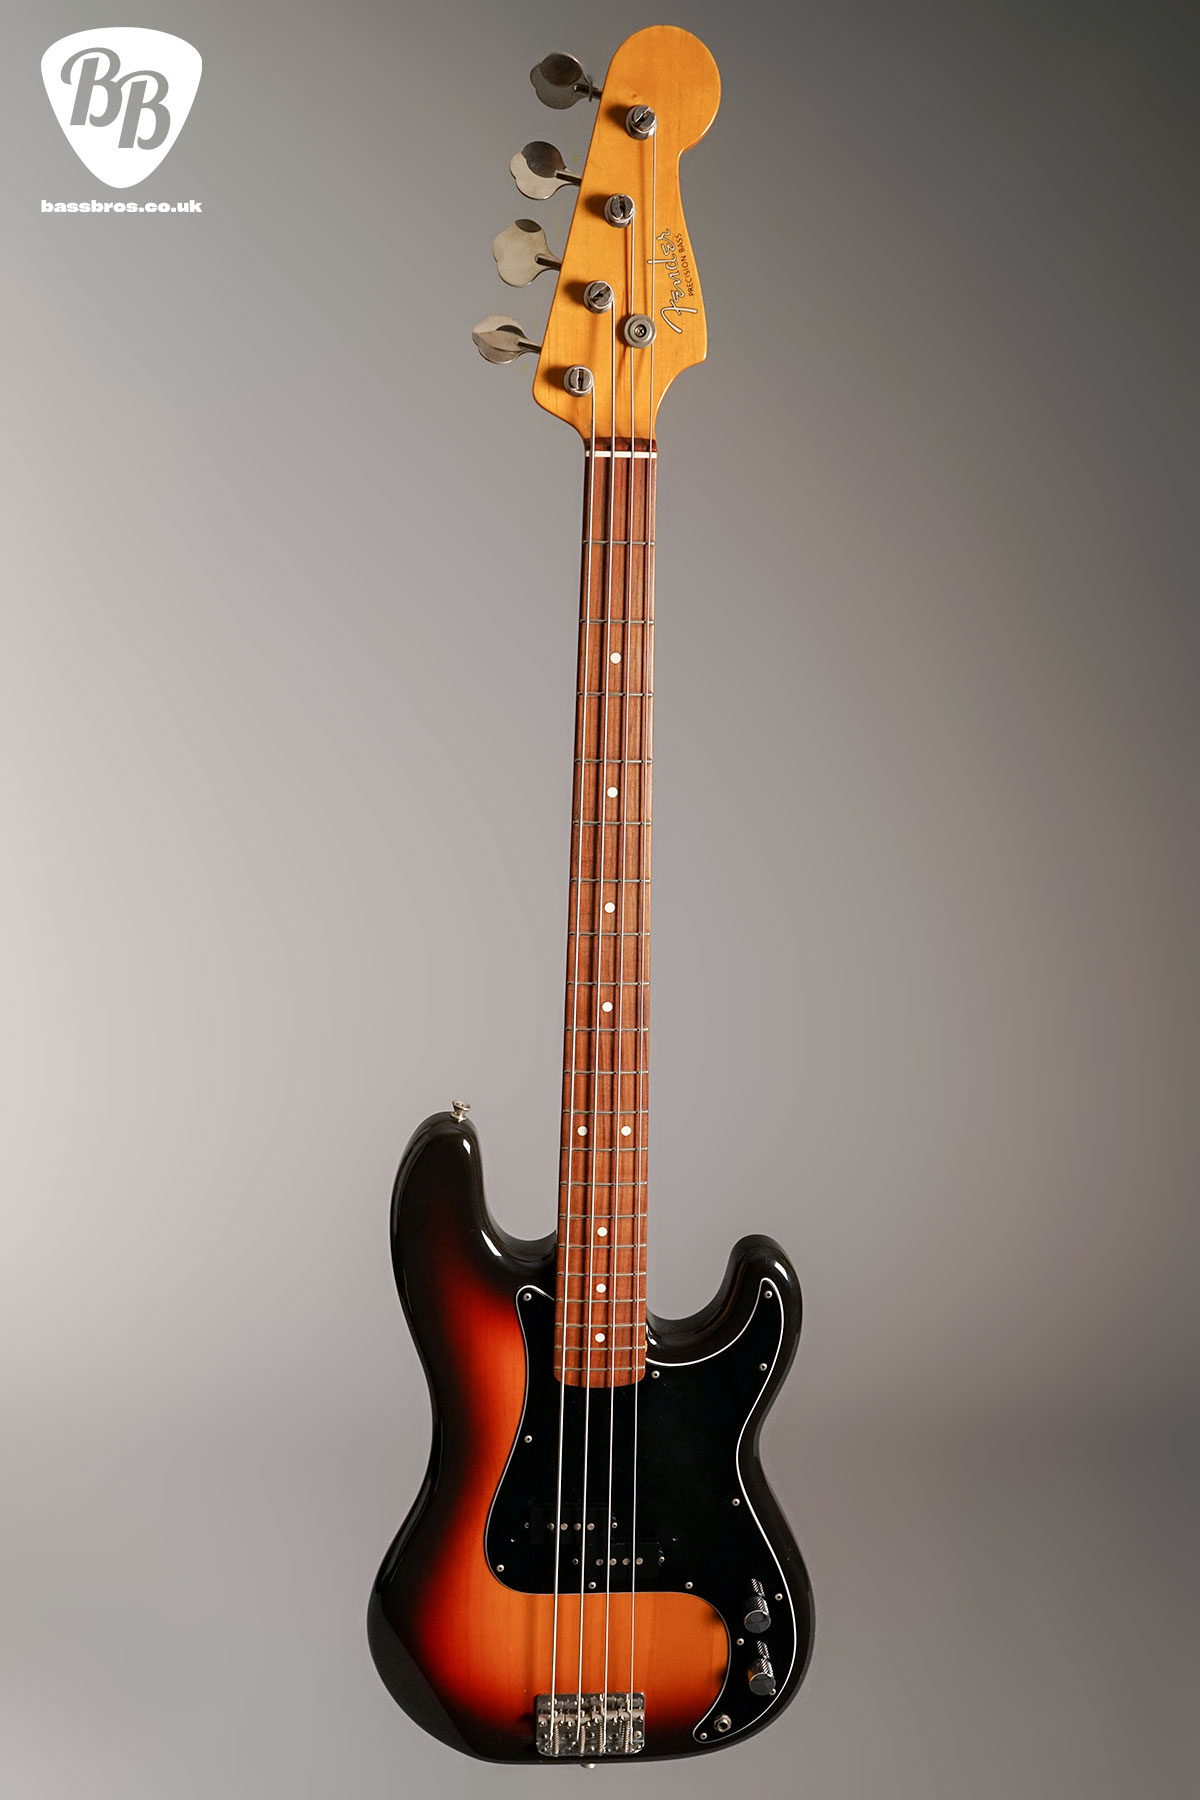 Fender Japan PB Precision Bass Reissue   BassBros